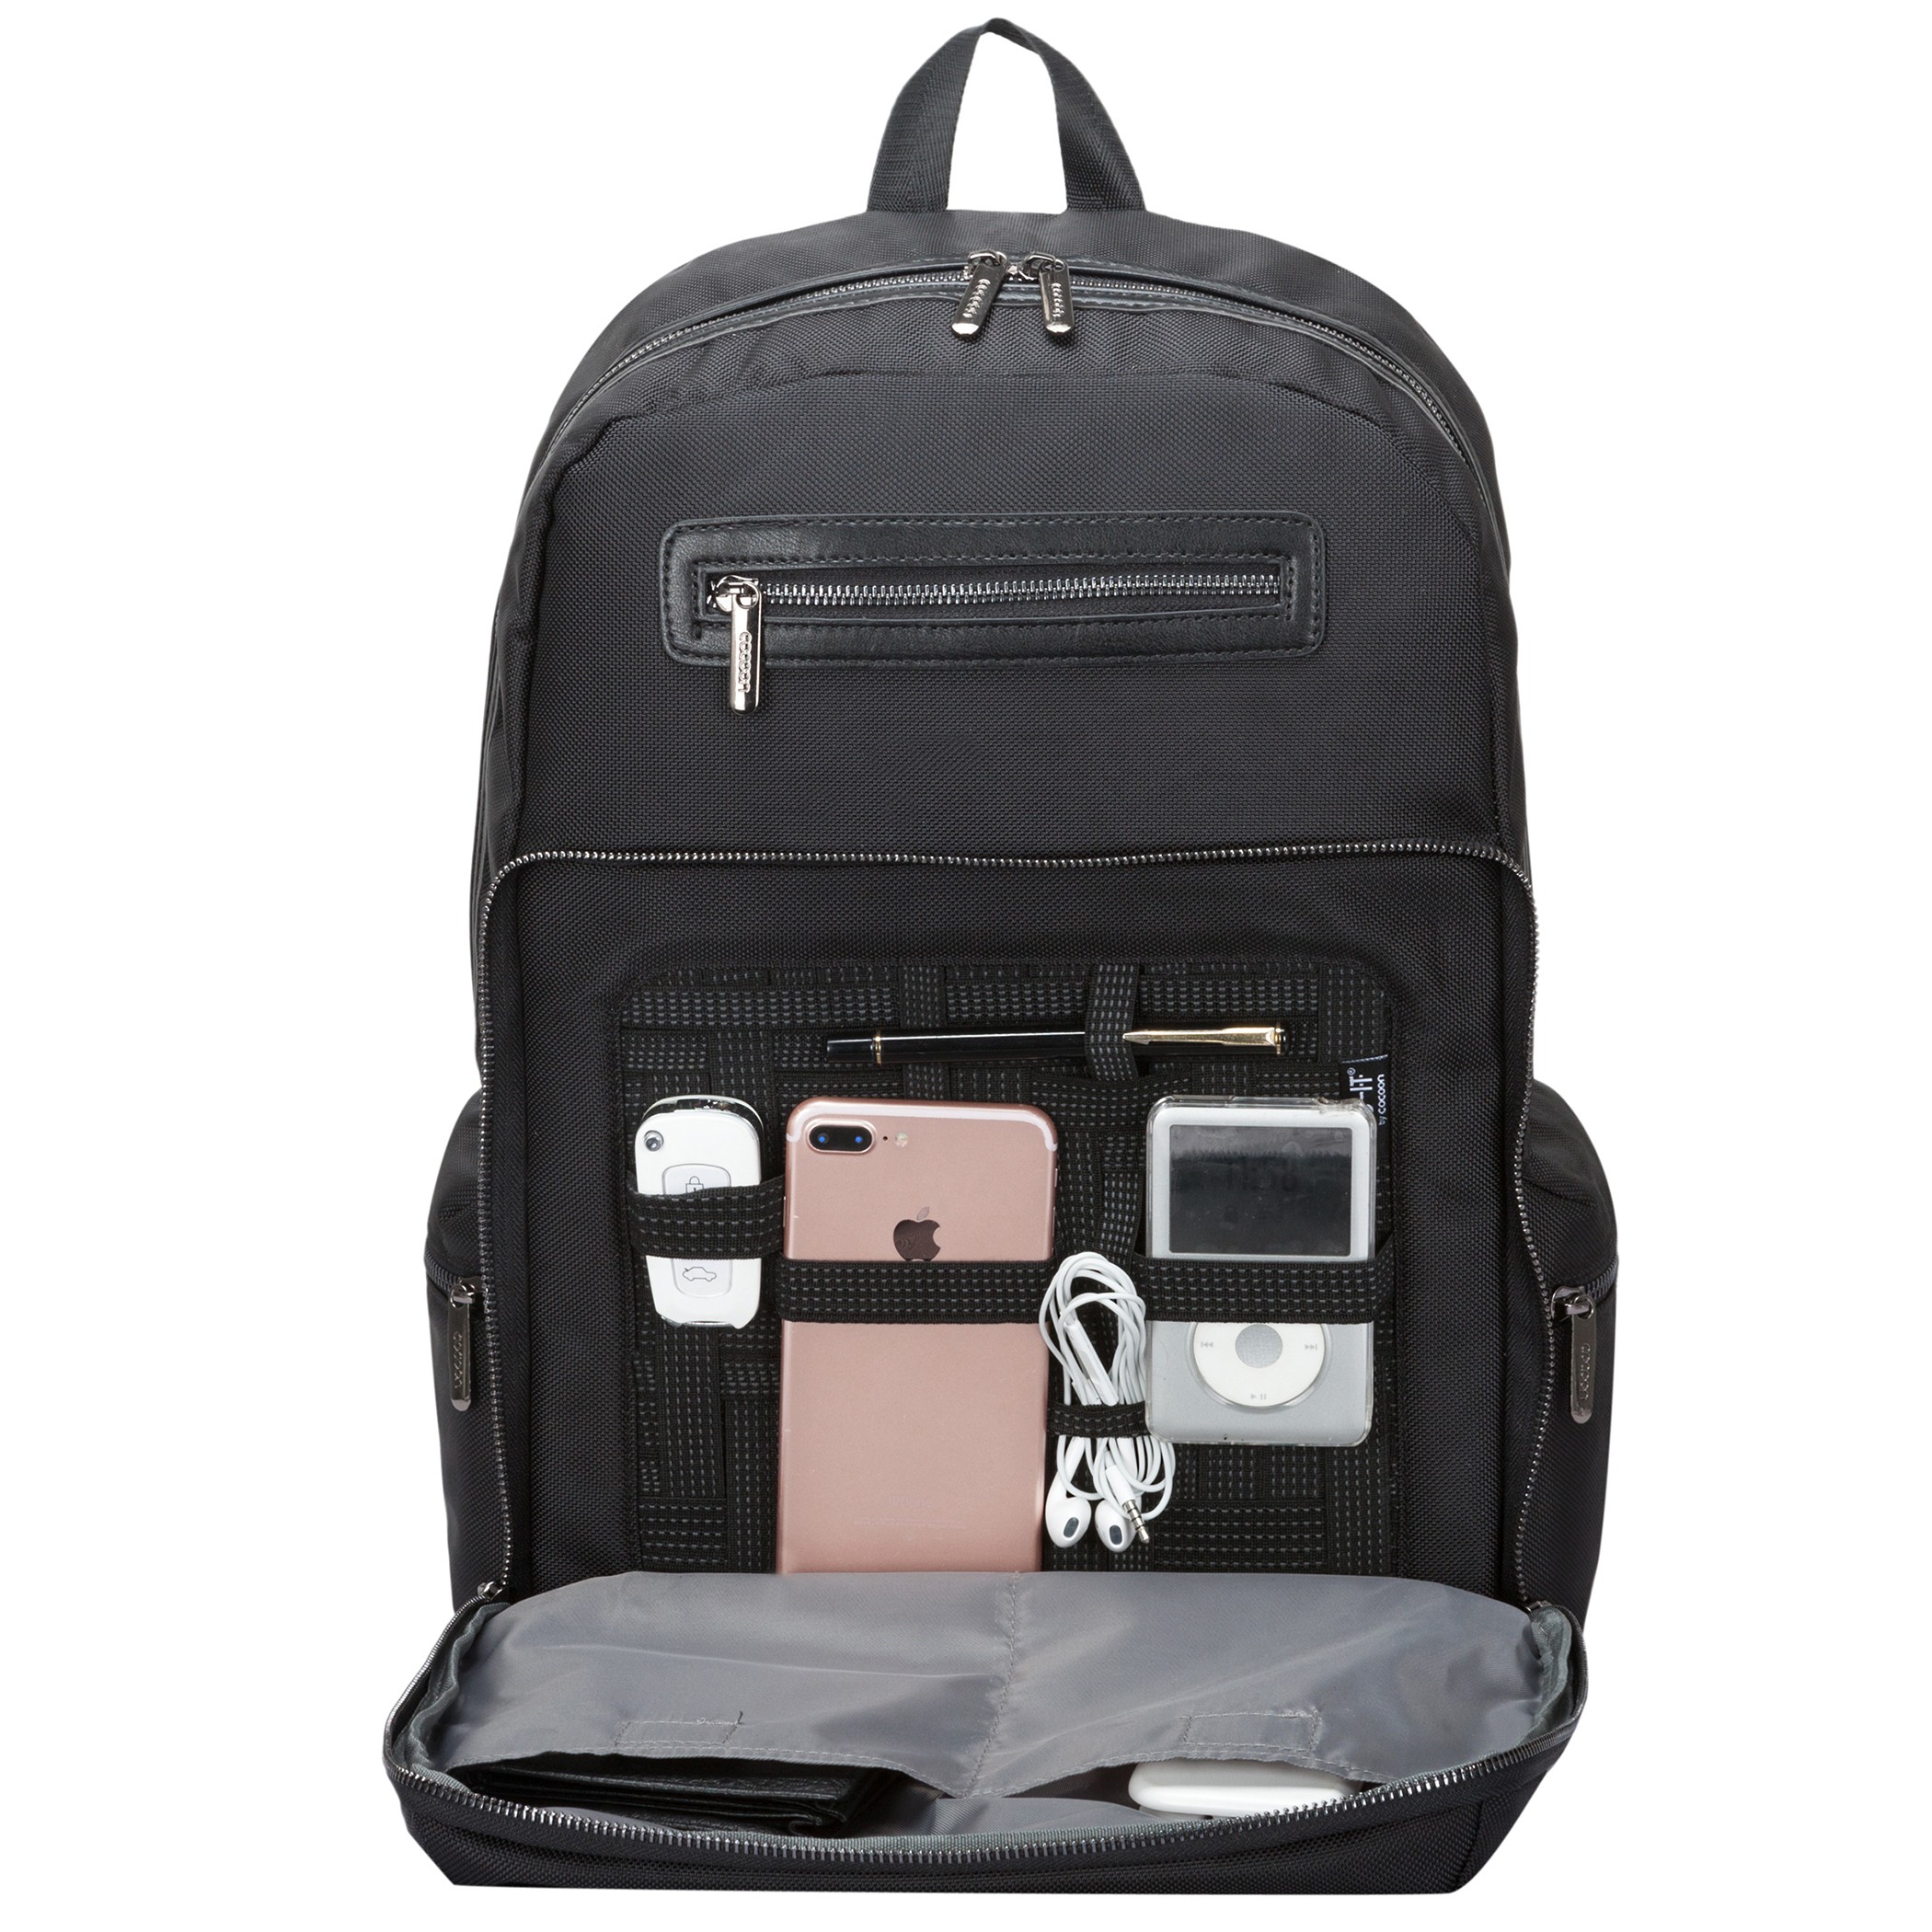 Lacuna Coil Unisex Adult Backpack Bookbag Travel Bag Schoolbags Laptop Bag